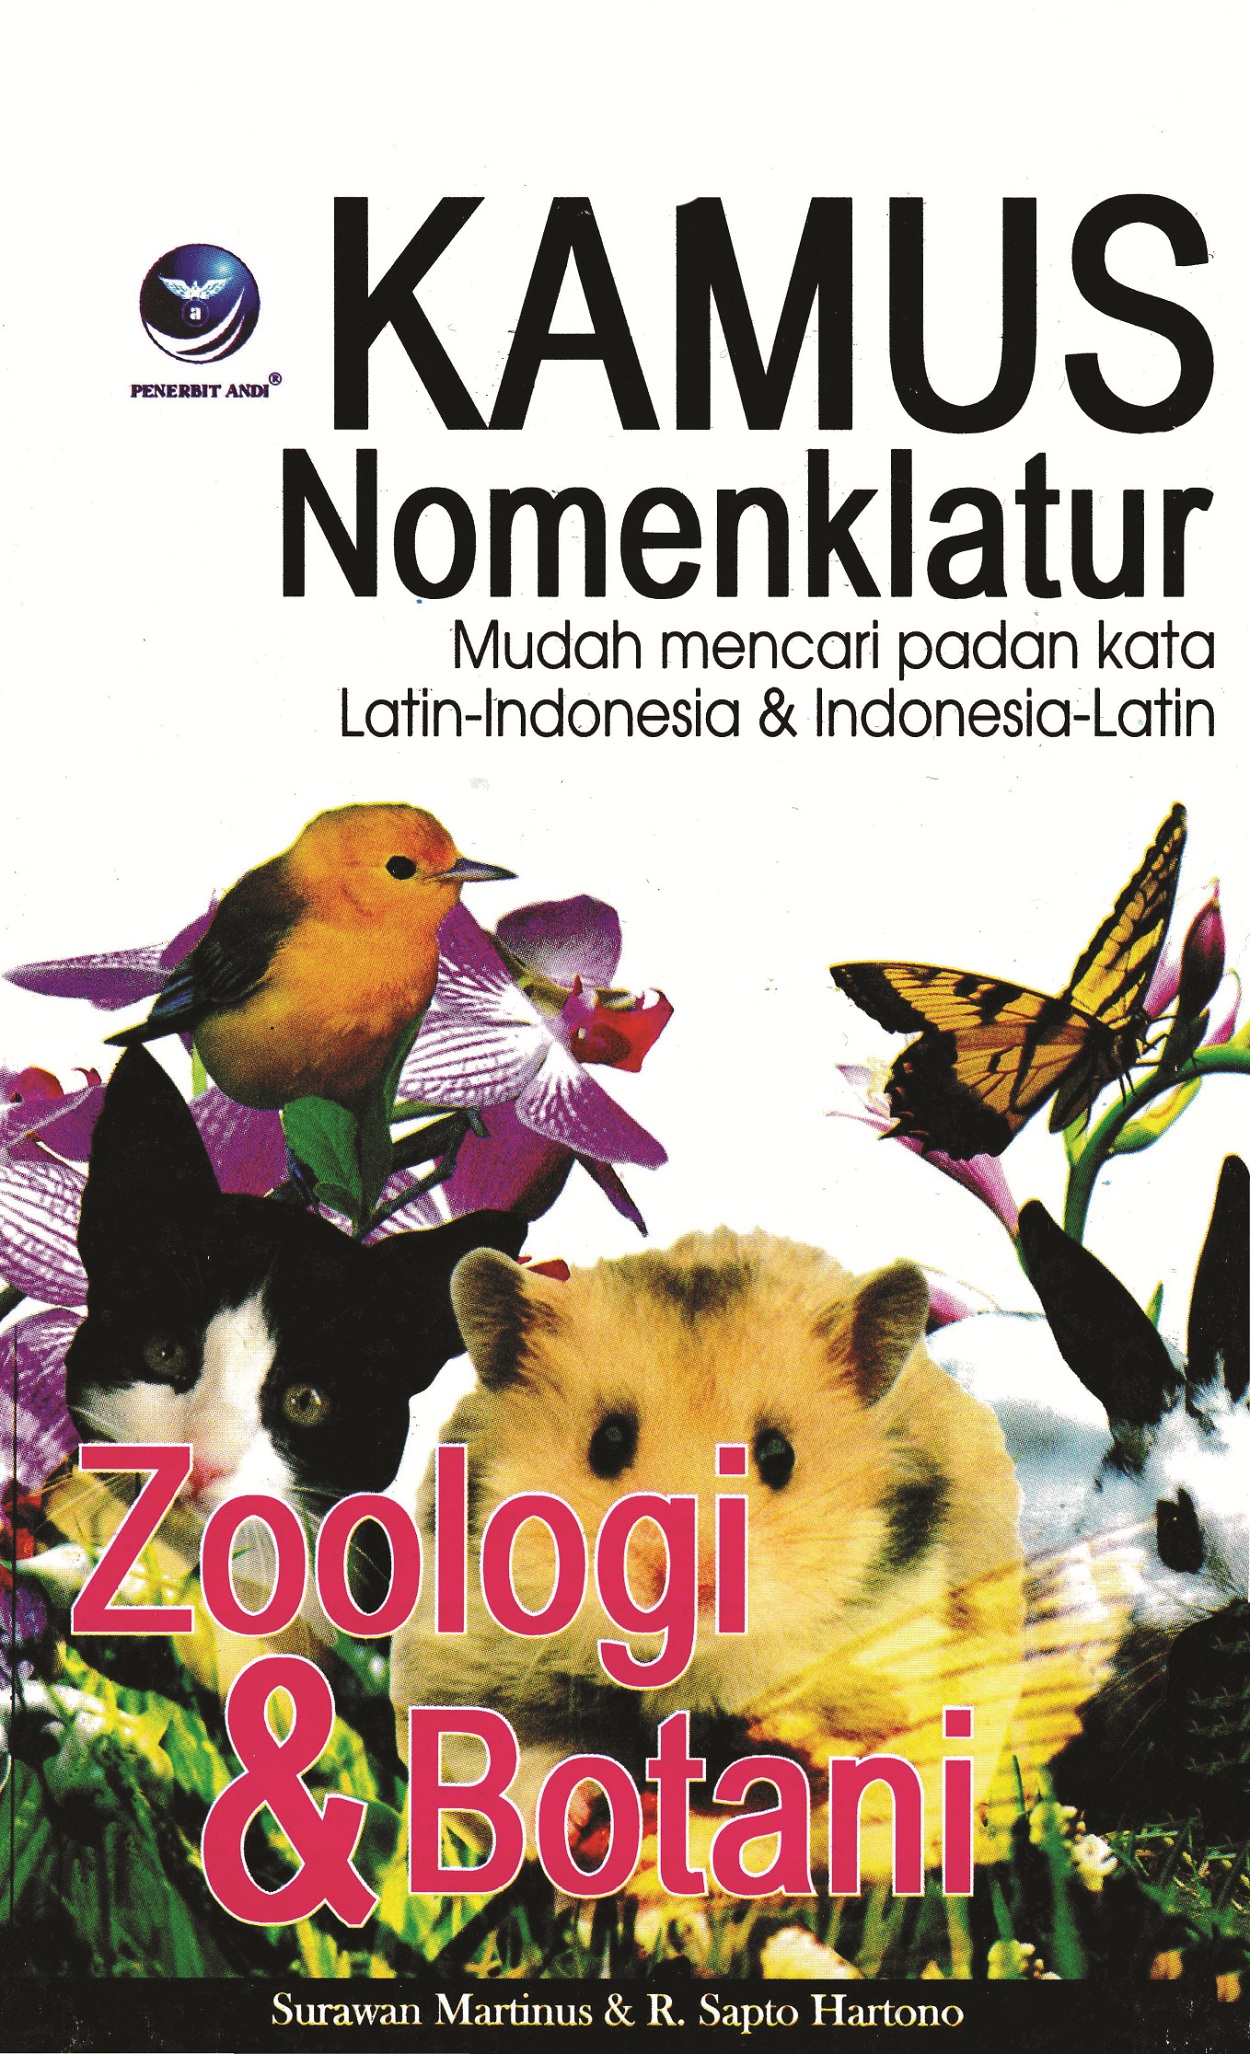 Kamus nomenklatur zoologi dan botani, mudah mencari padan kata Latin-Indonesia dan Indonesia-Latin [sumber elektronis]